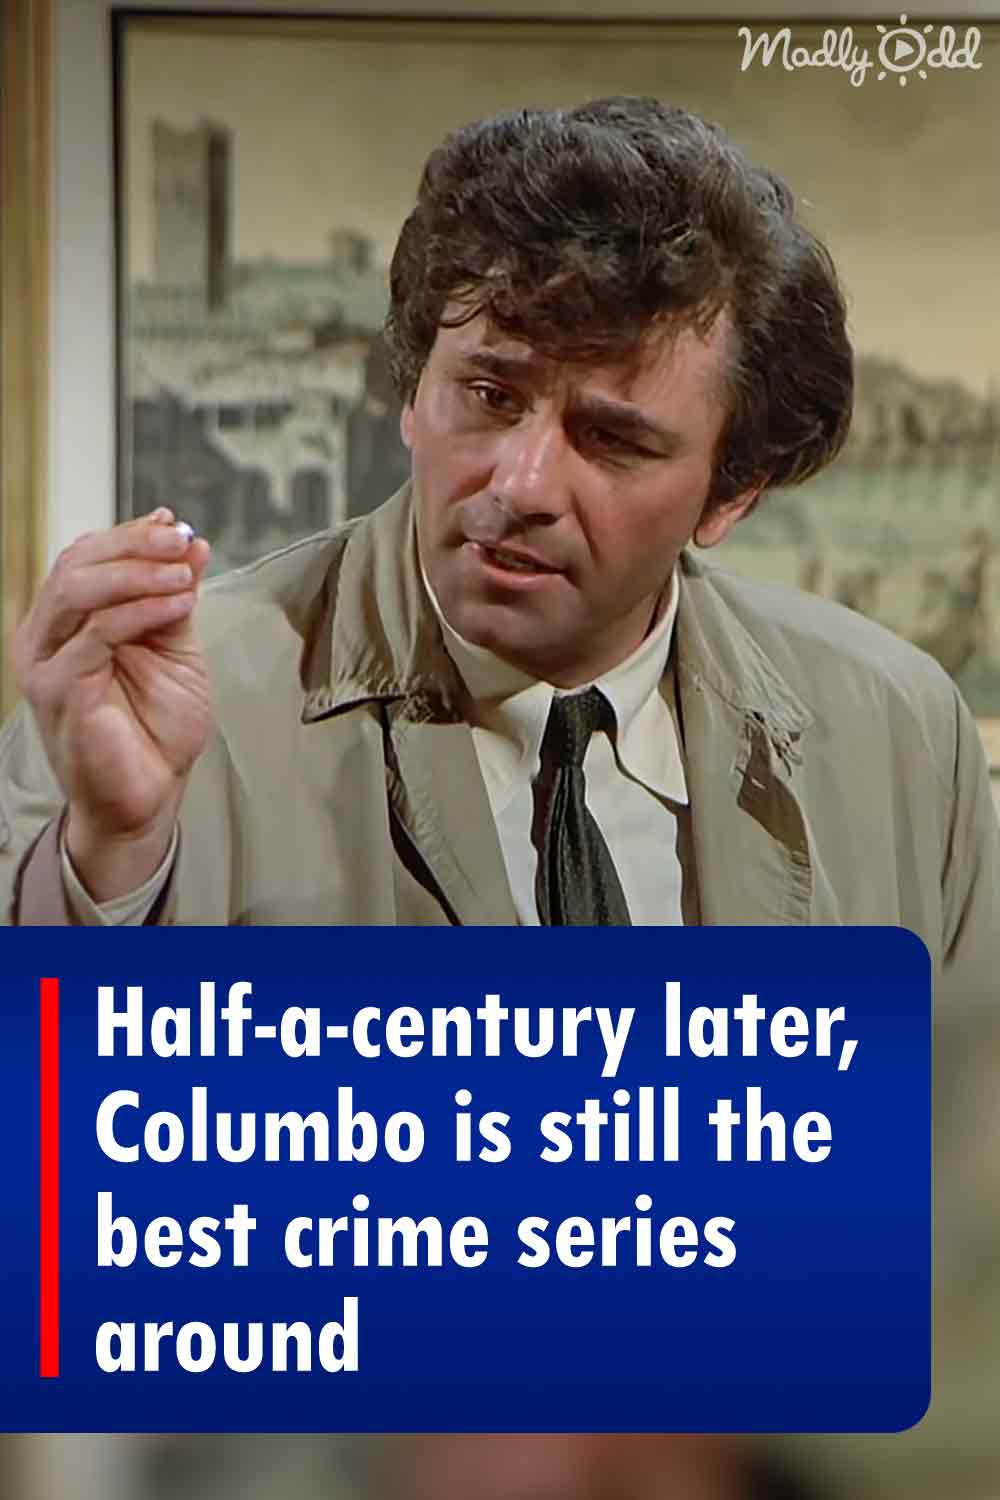 Half-a-century later, Columbo is still the best crime series around